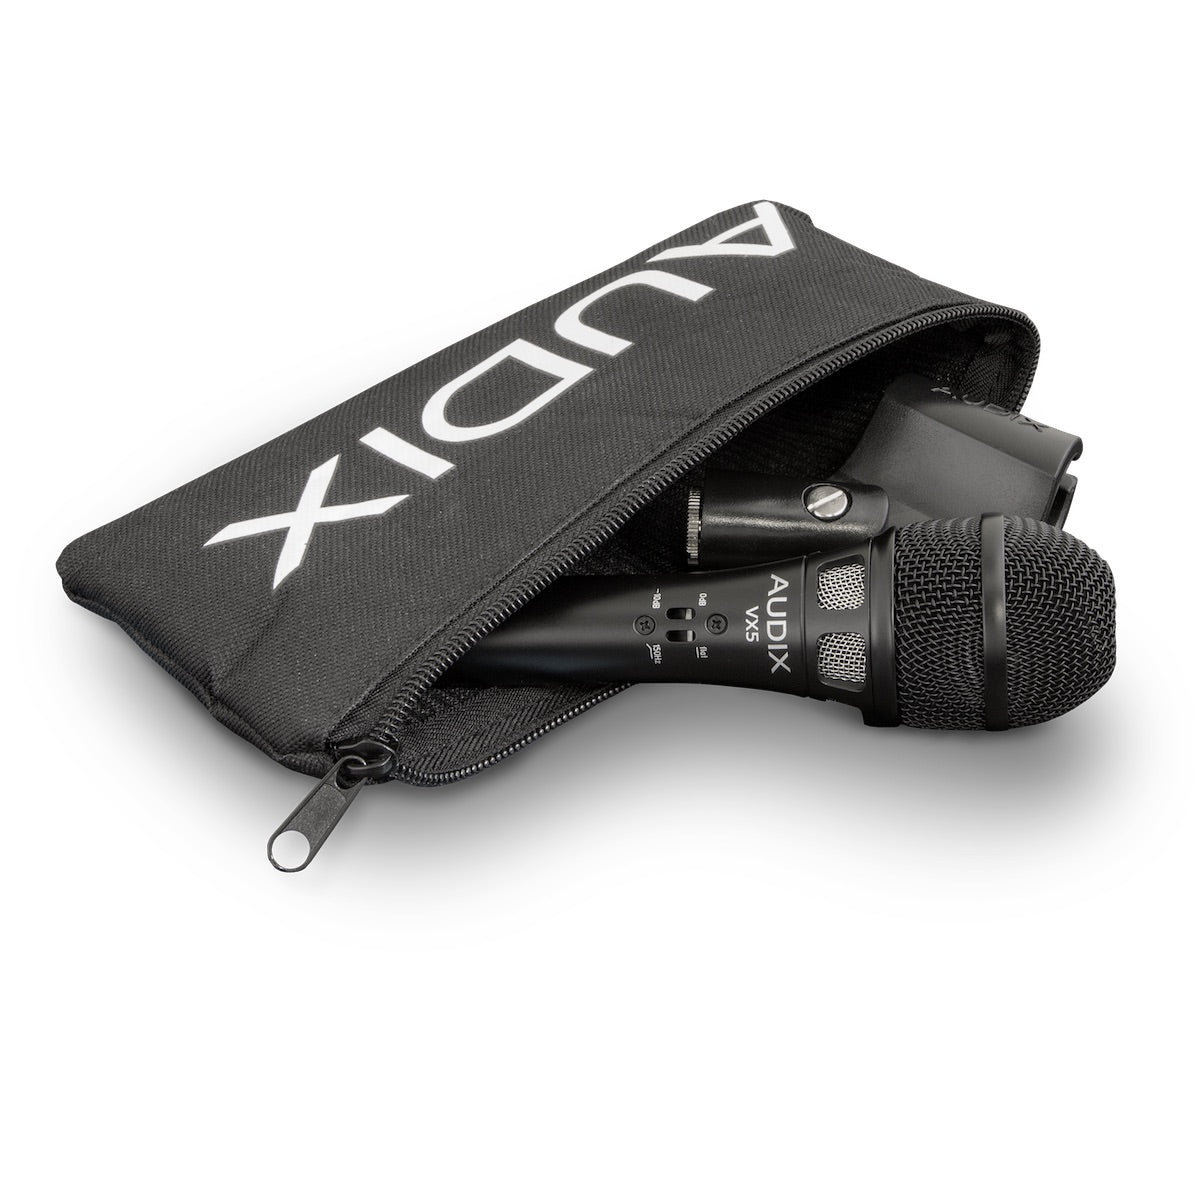 Audix VX5 Premium Electret Condenser Vocal Microphone, pouch